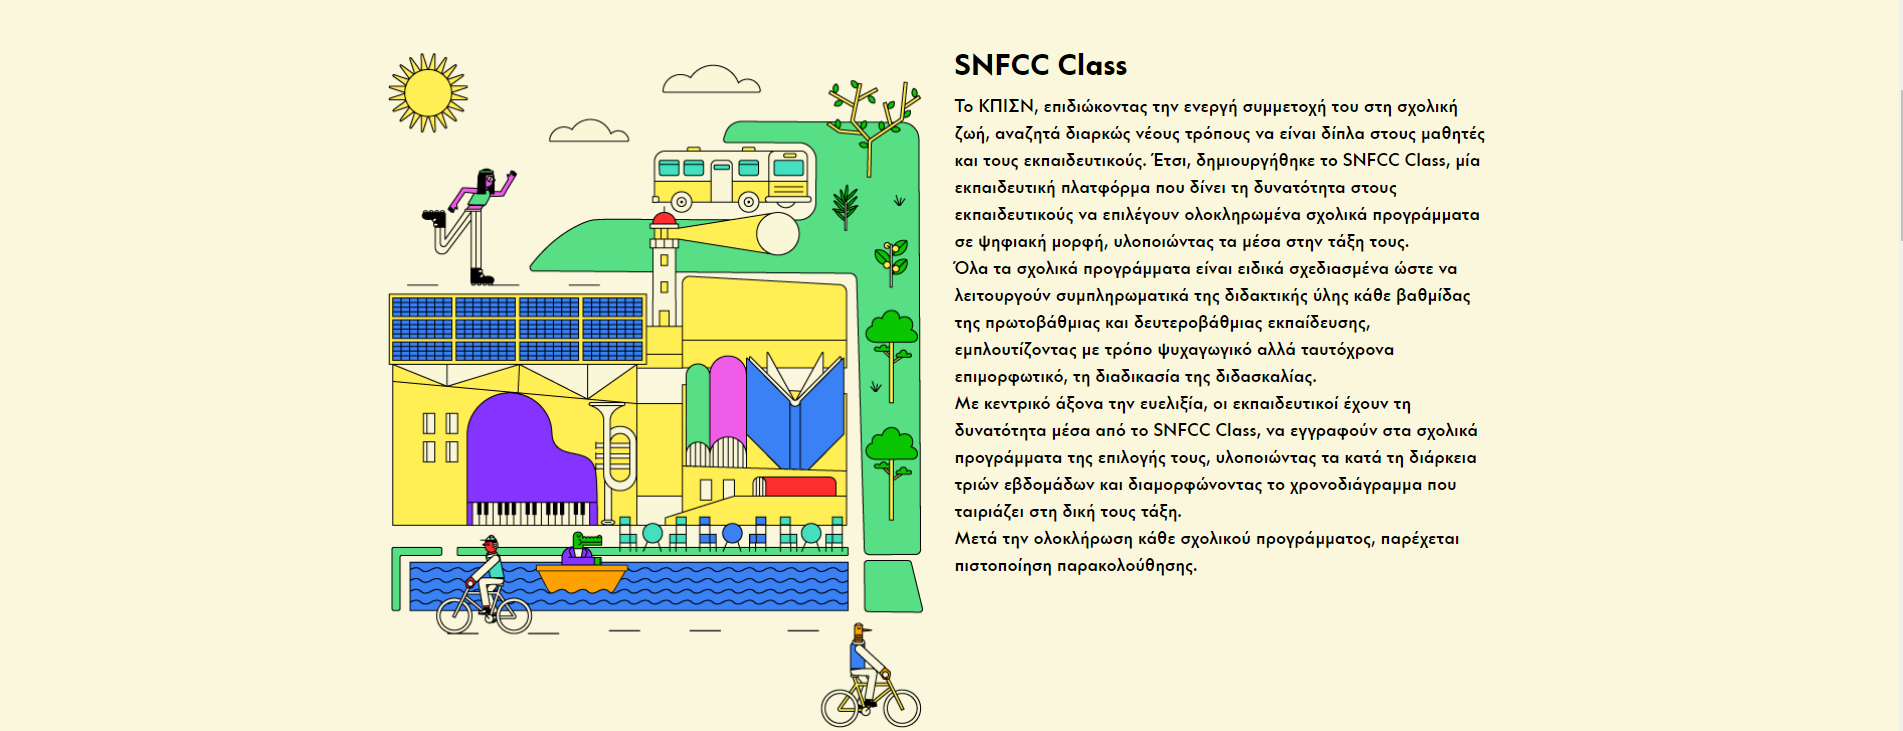 SNFCC Class